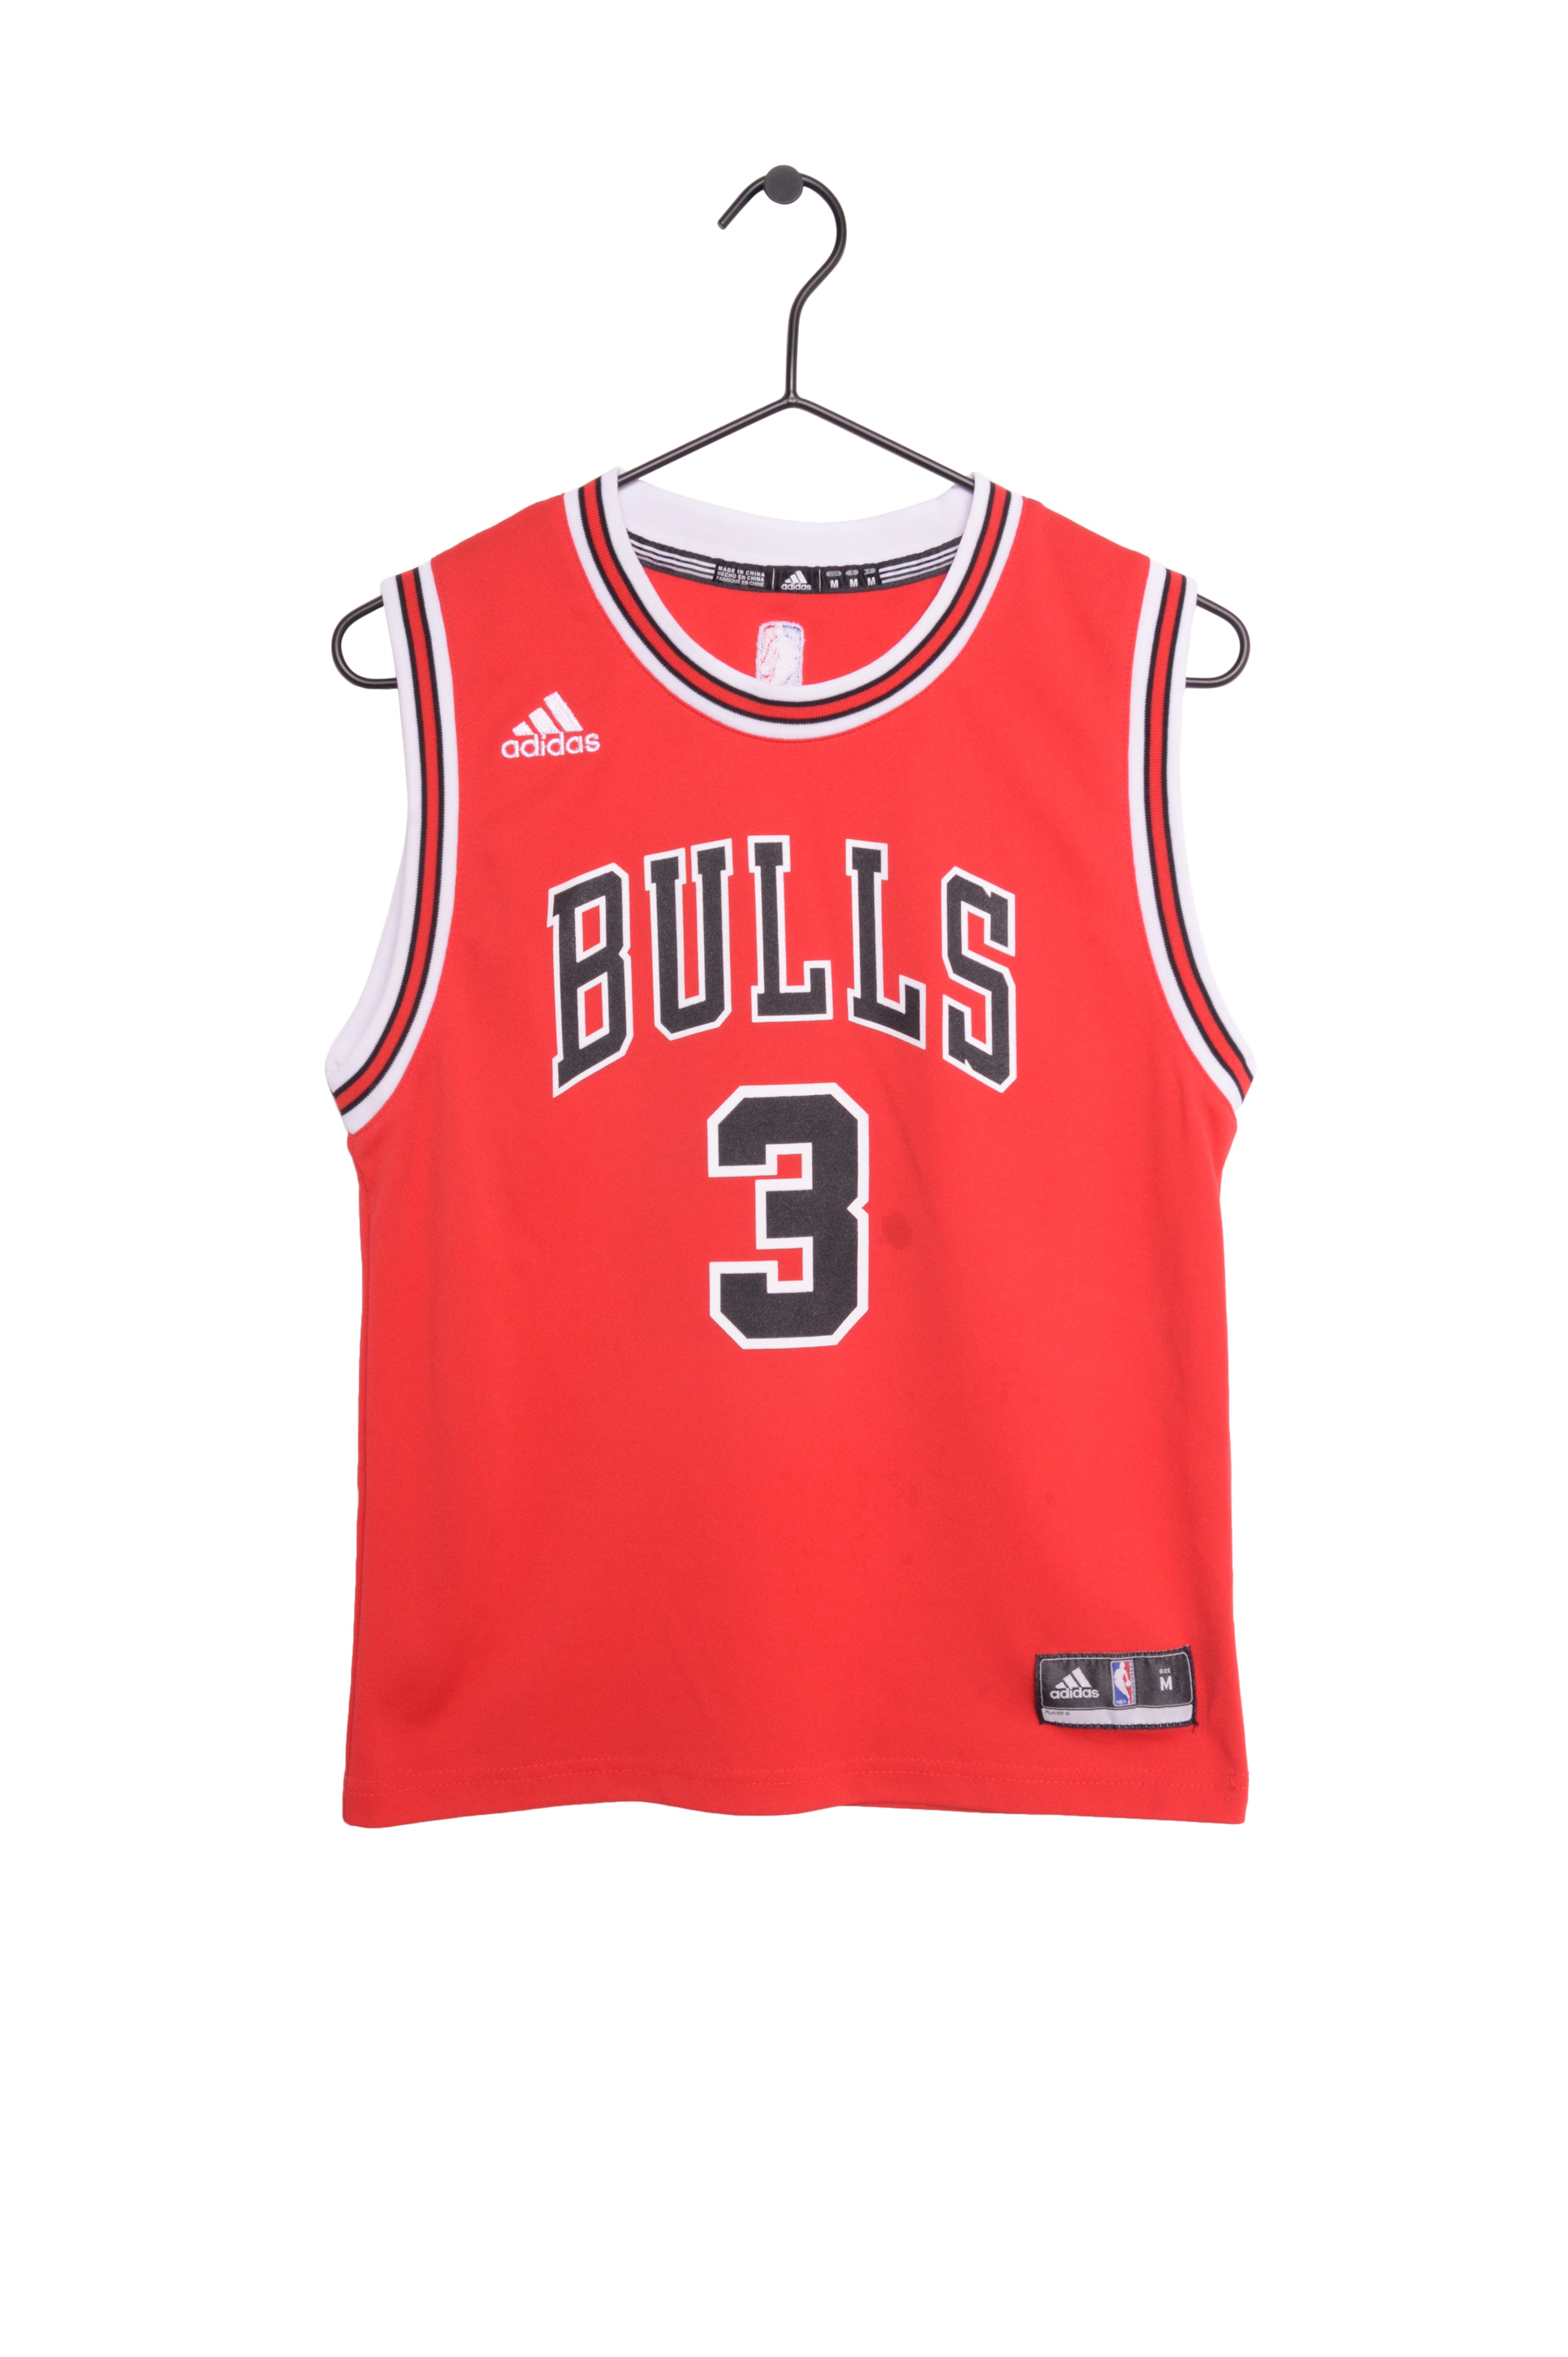 Adidas Men's Size XS Red Bulls basketball jersey (s)